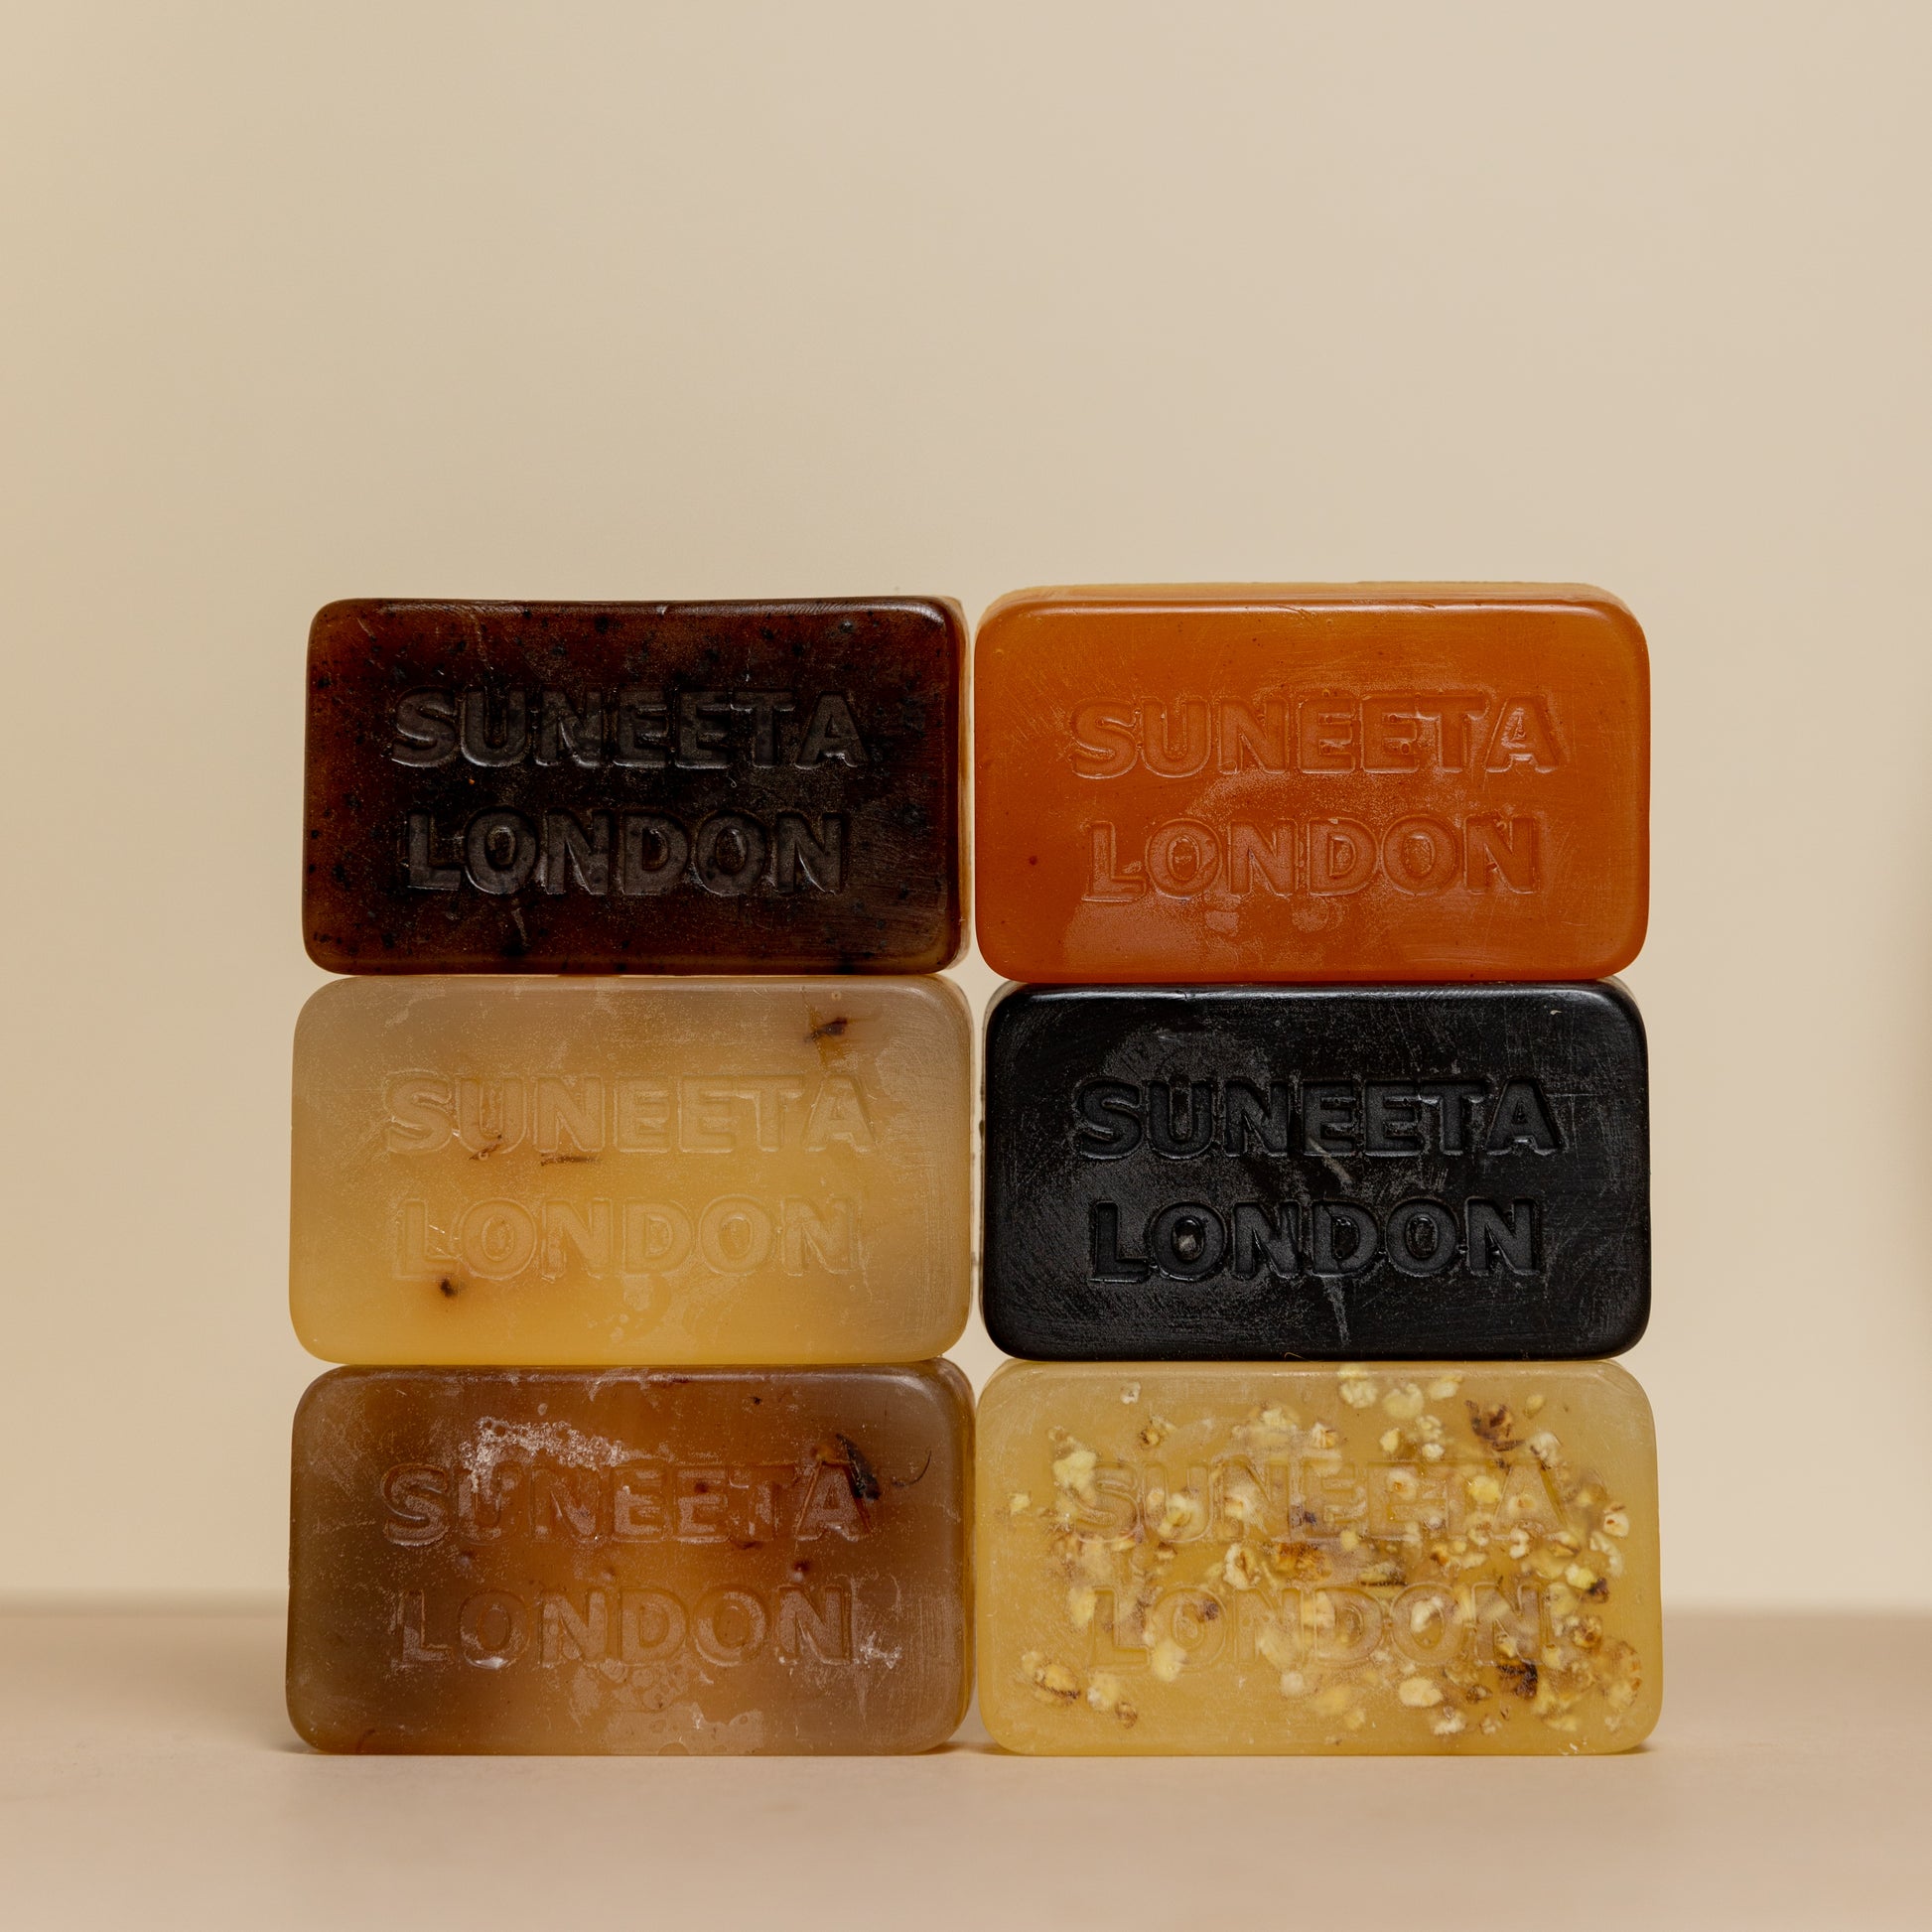 Suneeta London soap